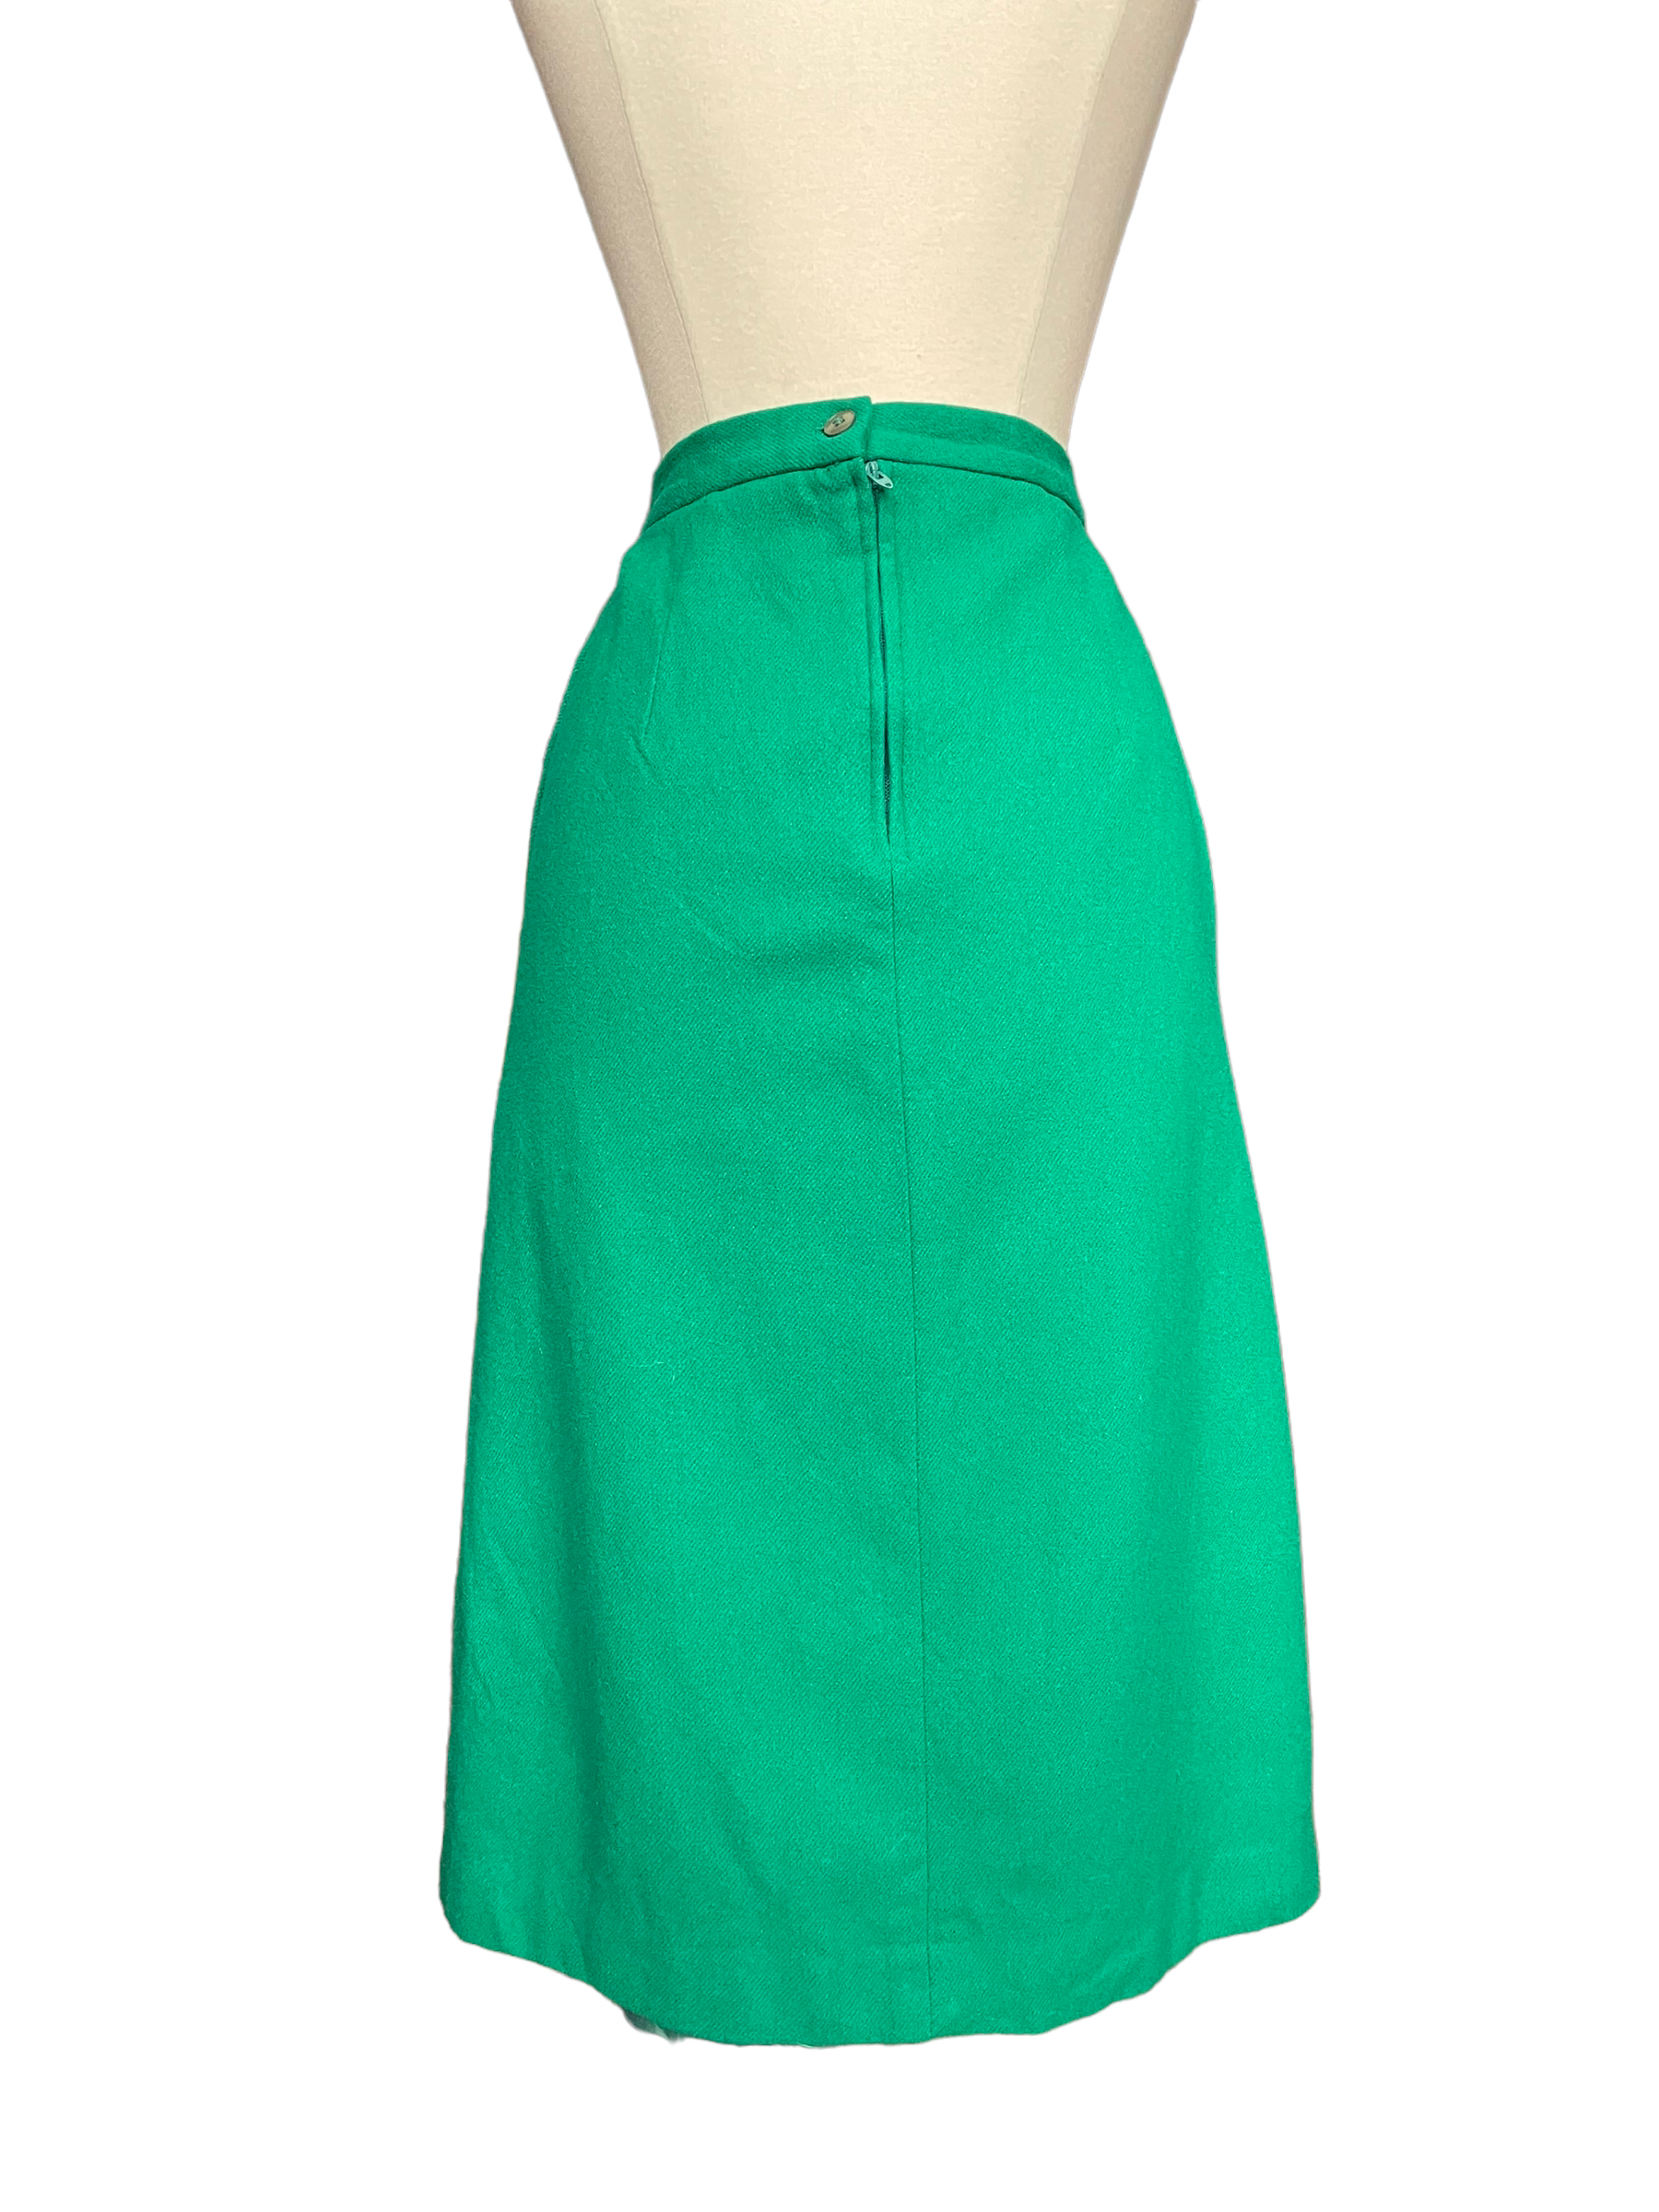 Full back view of Vintage 1960s Green Wool Pencil Skirt | Barn Owl Vintage | Seattle Vintage Skirts